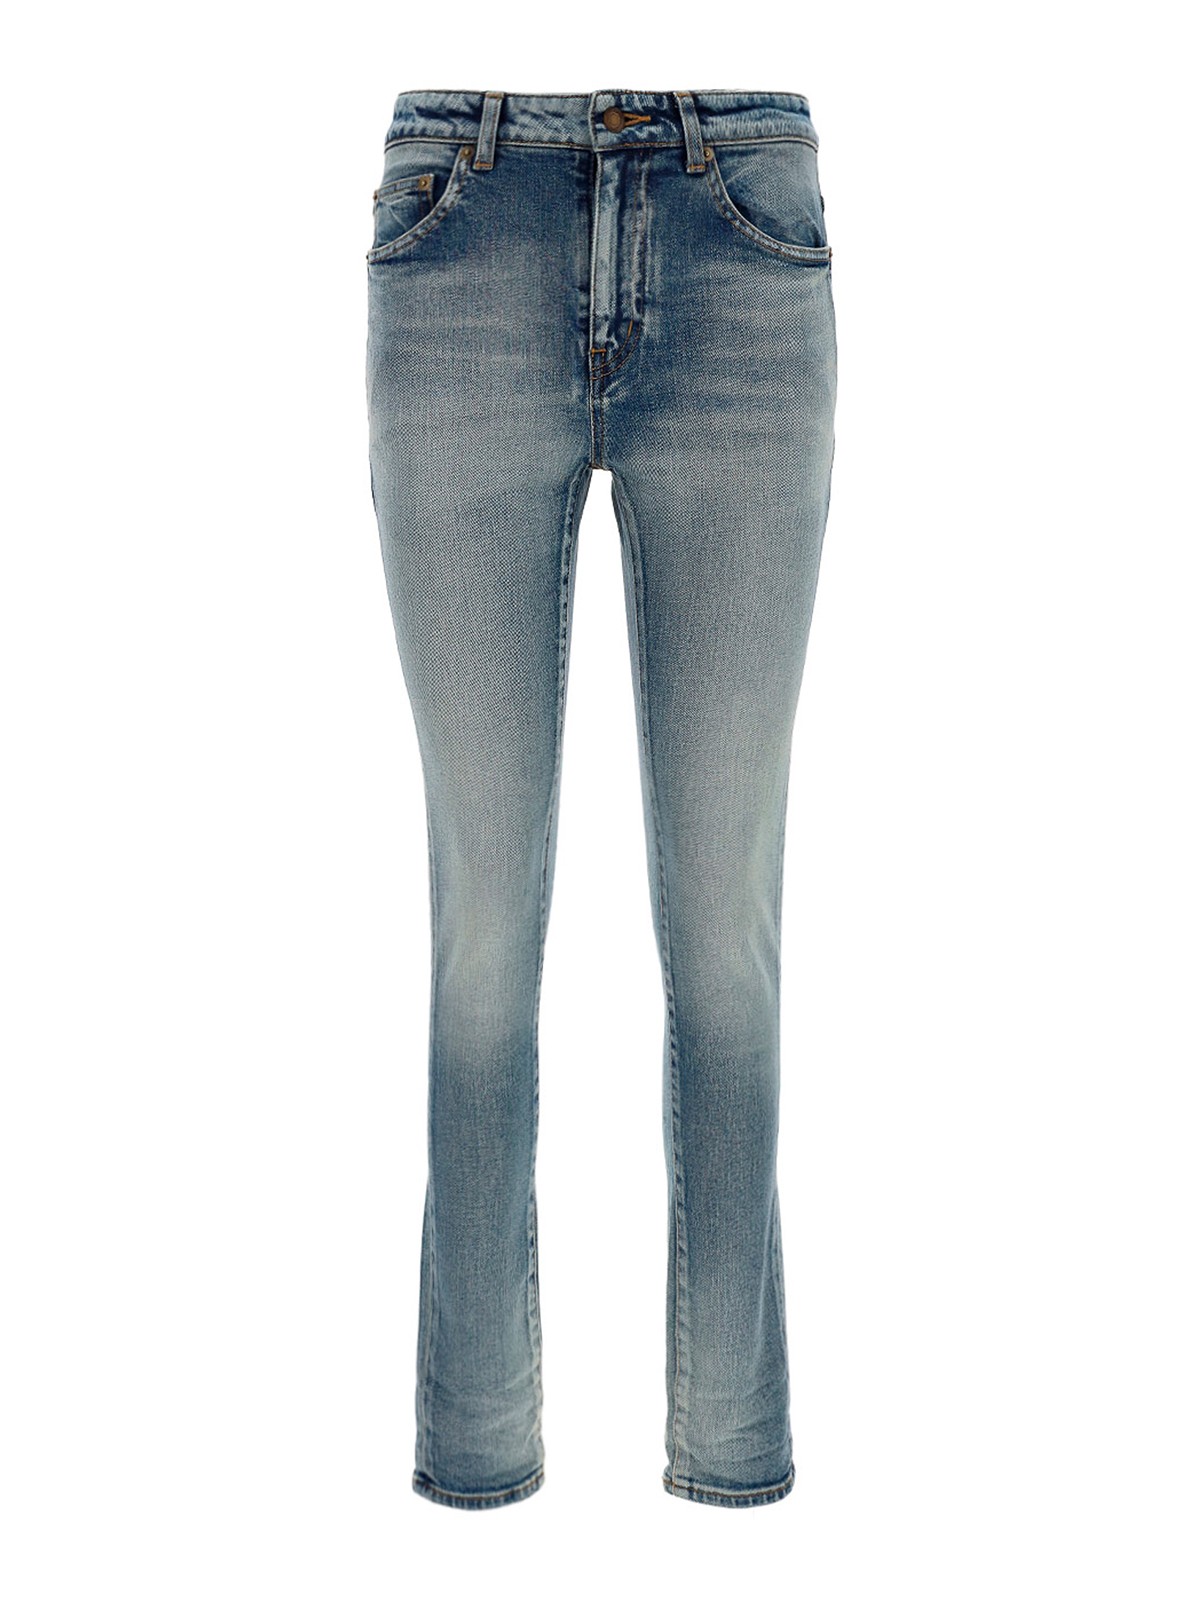 SAINT LAURENT Skinny jeans VINTAGE EFFECT SKINNY JEANS